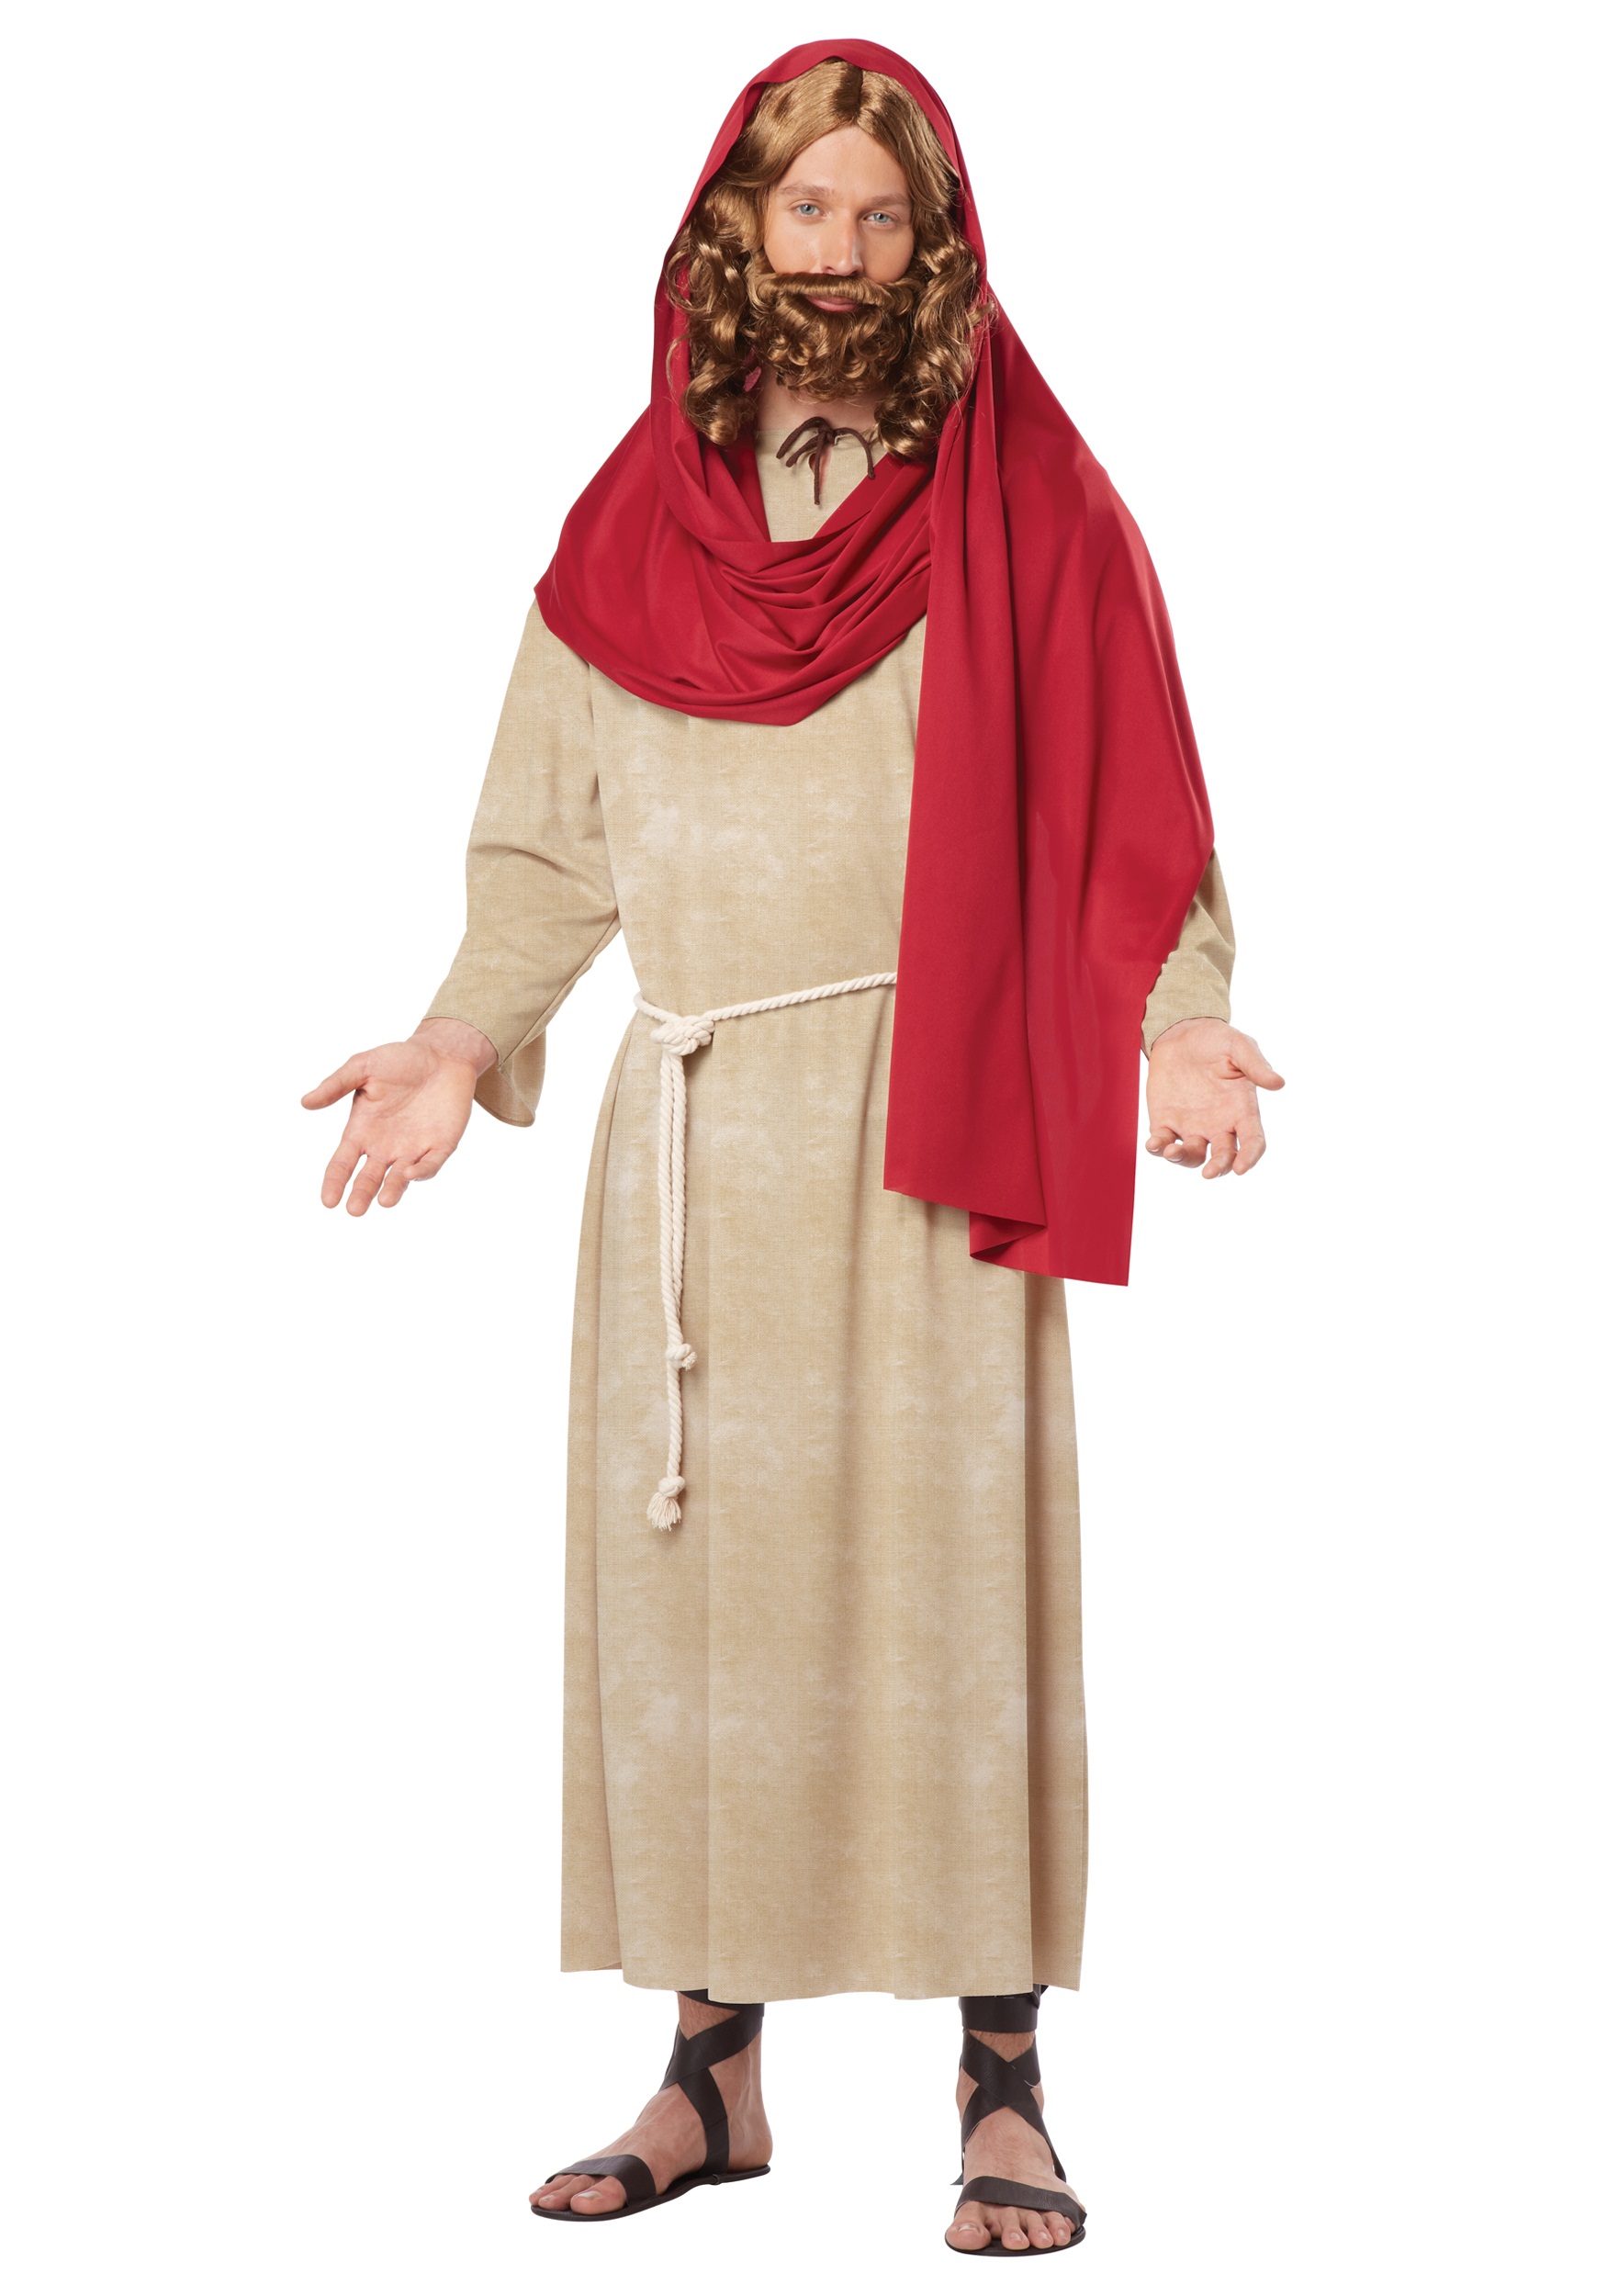 Photos - Fancy Dress California Costumes Jesus Christ Adult Costume Beige/Red 